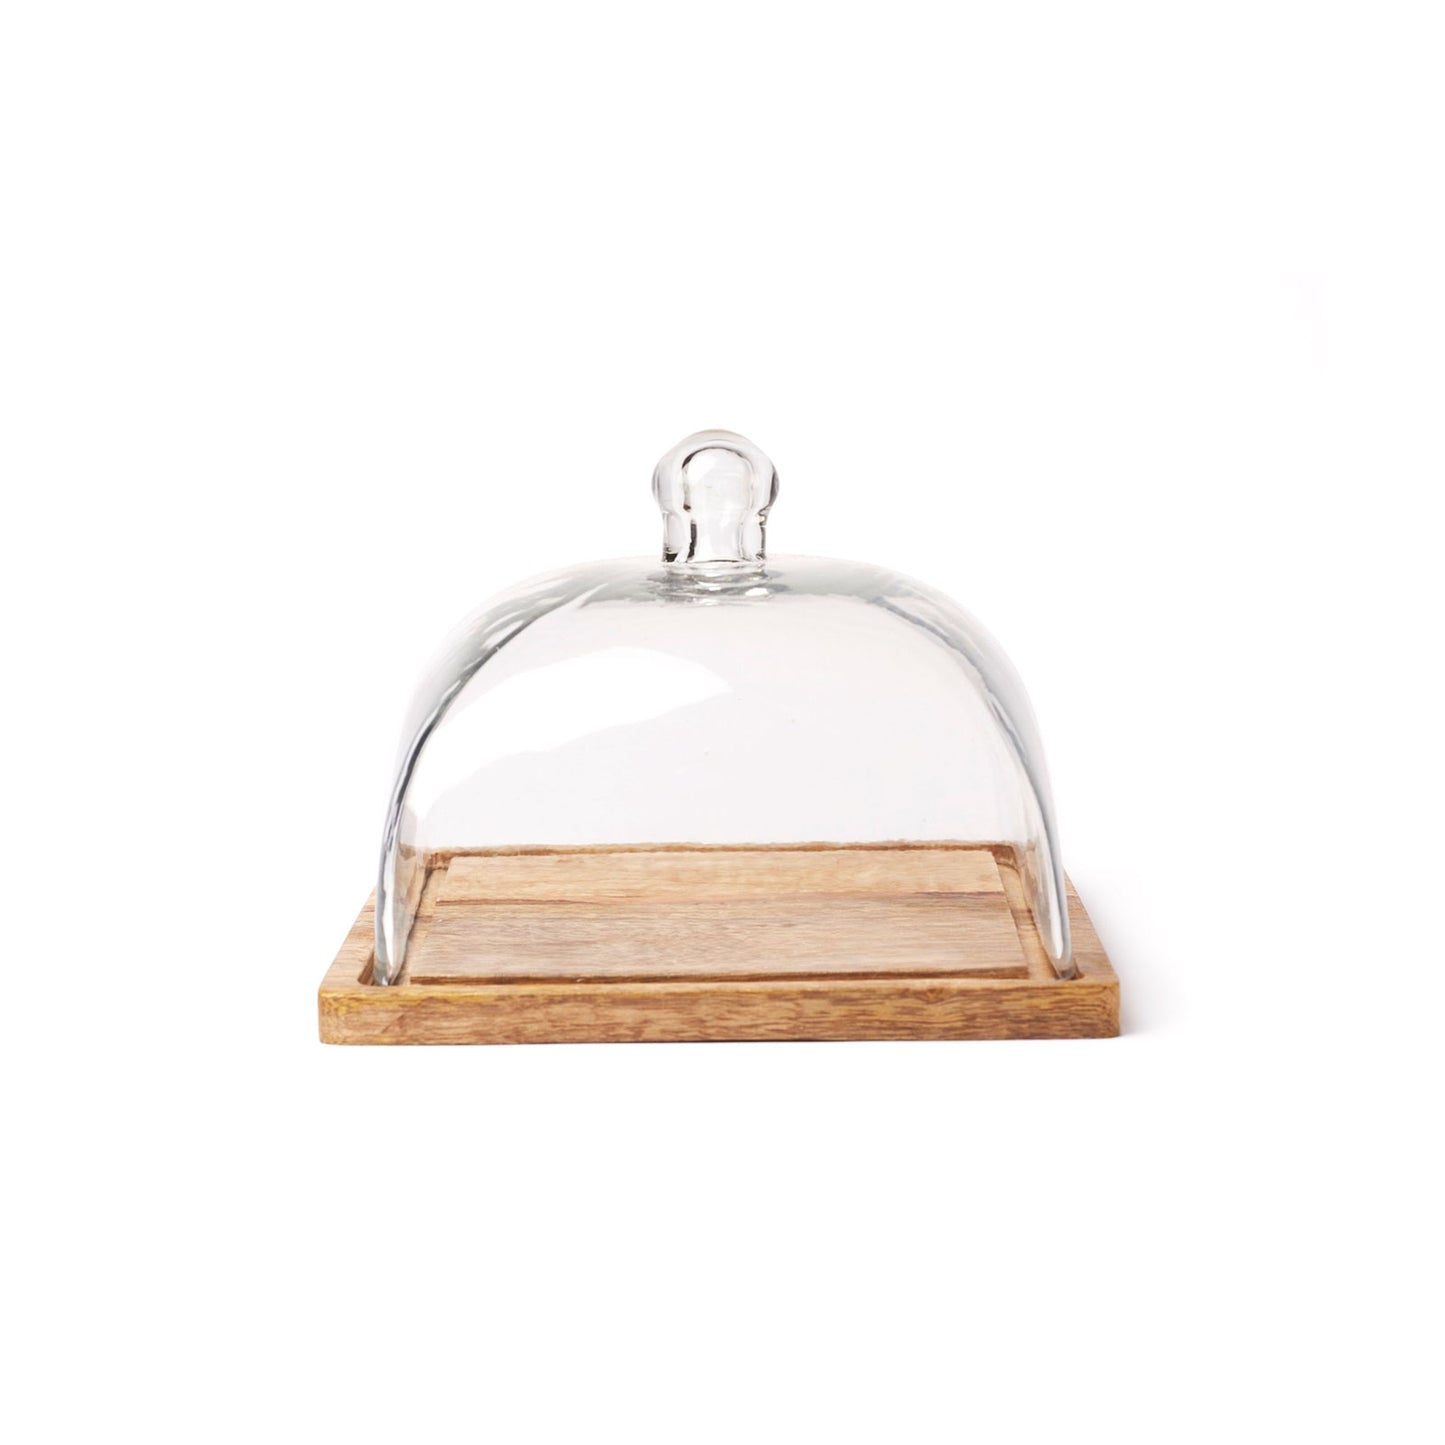 Mango Wood & Glass Food Dome / Plate